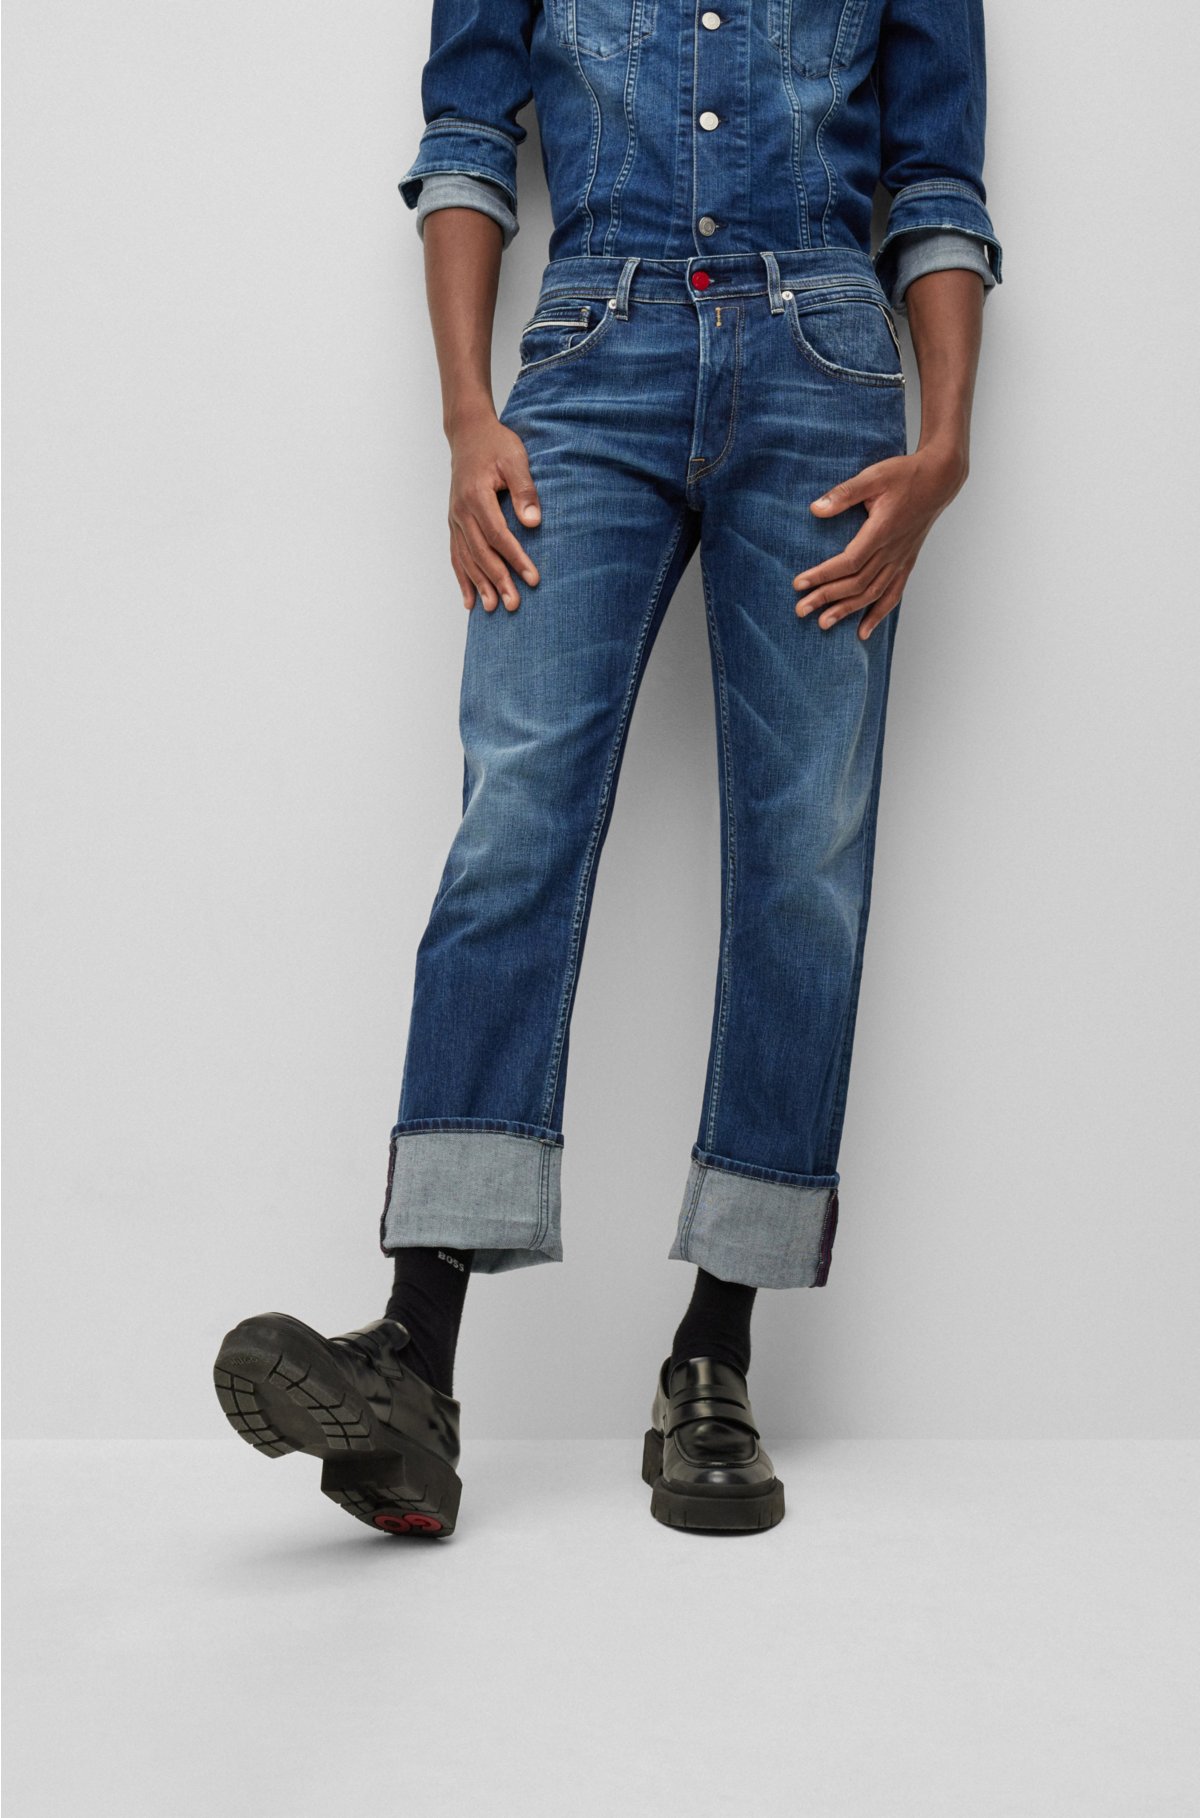 agitatie Augment chaos HUGO - HUGO | REPLAY straight-fit jeans in dark-blue stretch denim